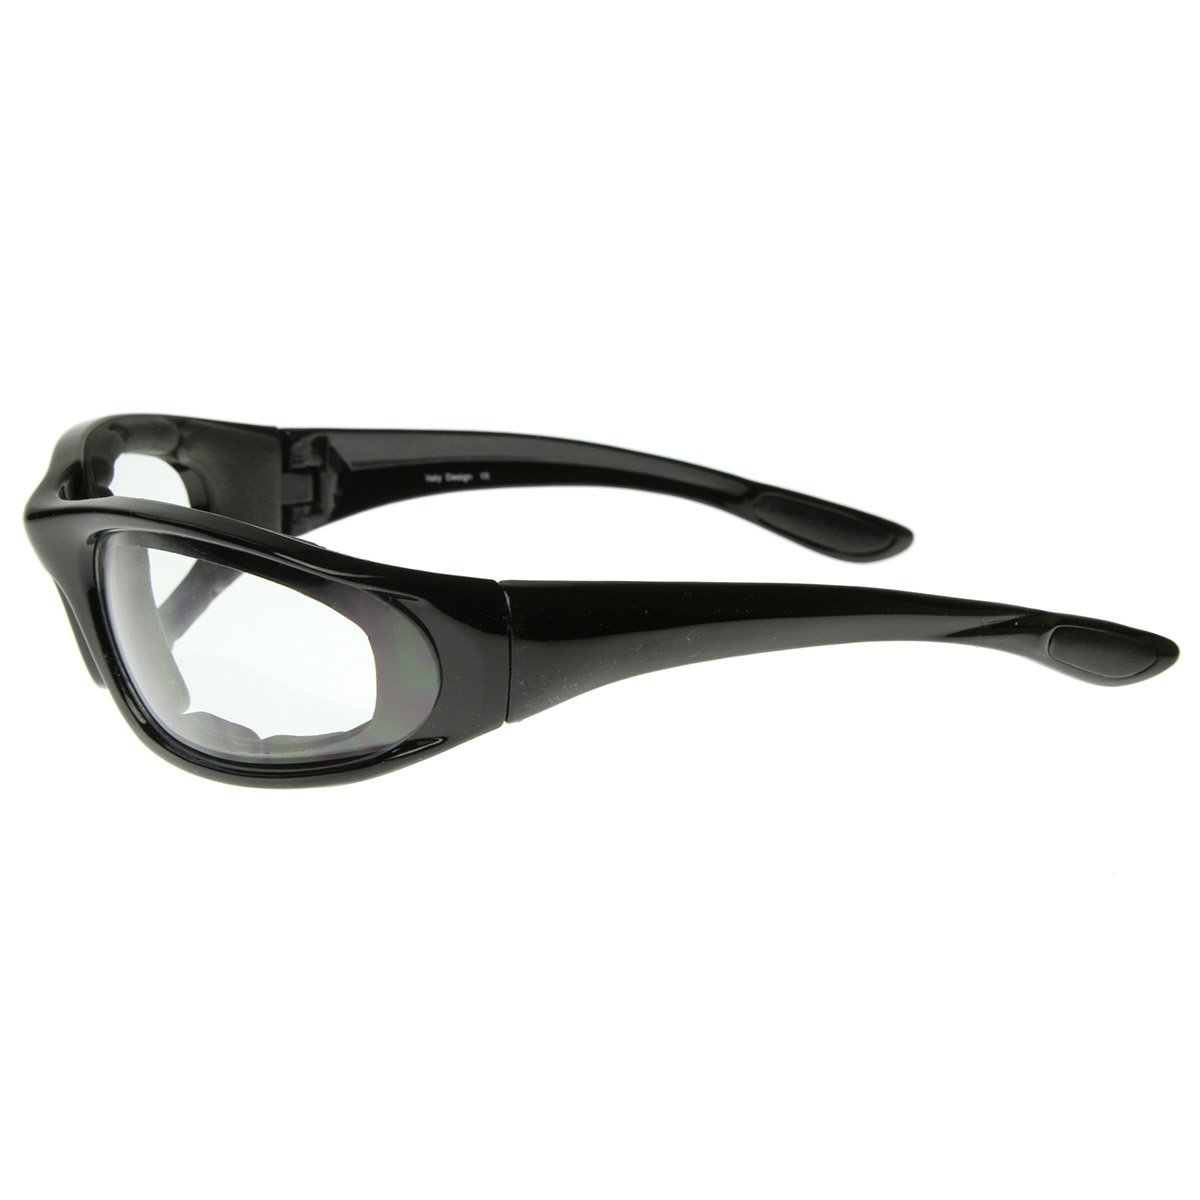 Protective Sports Eyewear Goggles Multisport Safety Padded Glasses - Shiny-Black Smoke